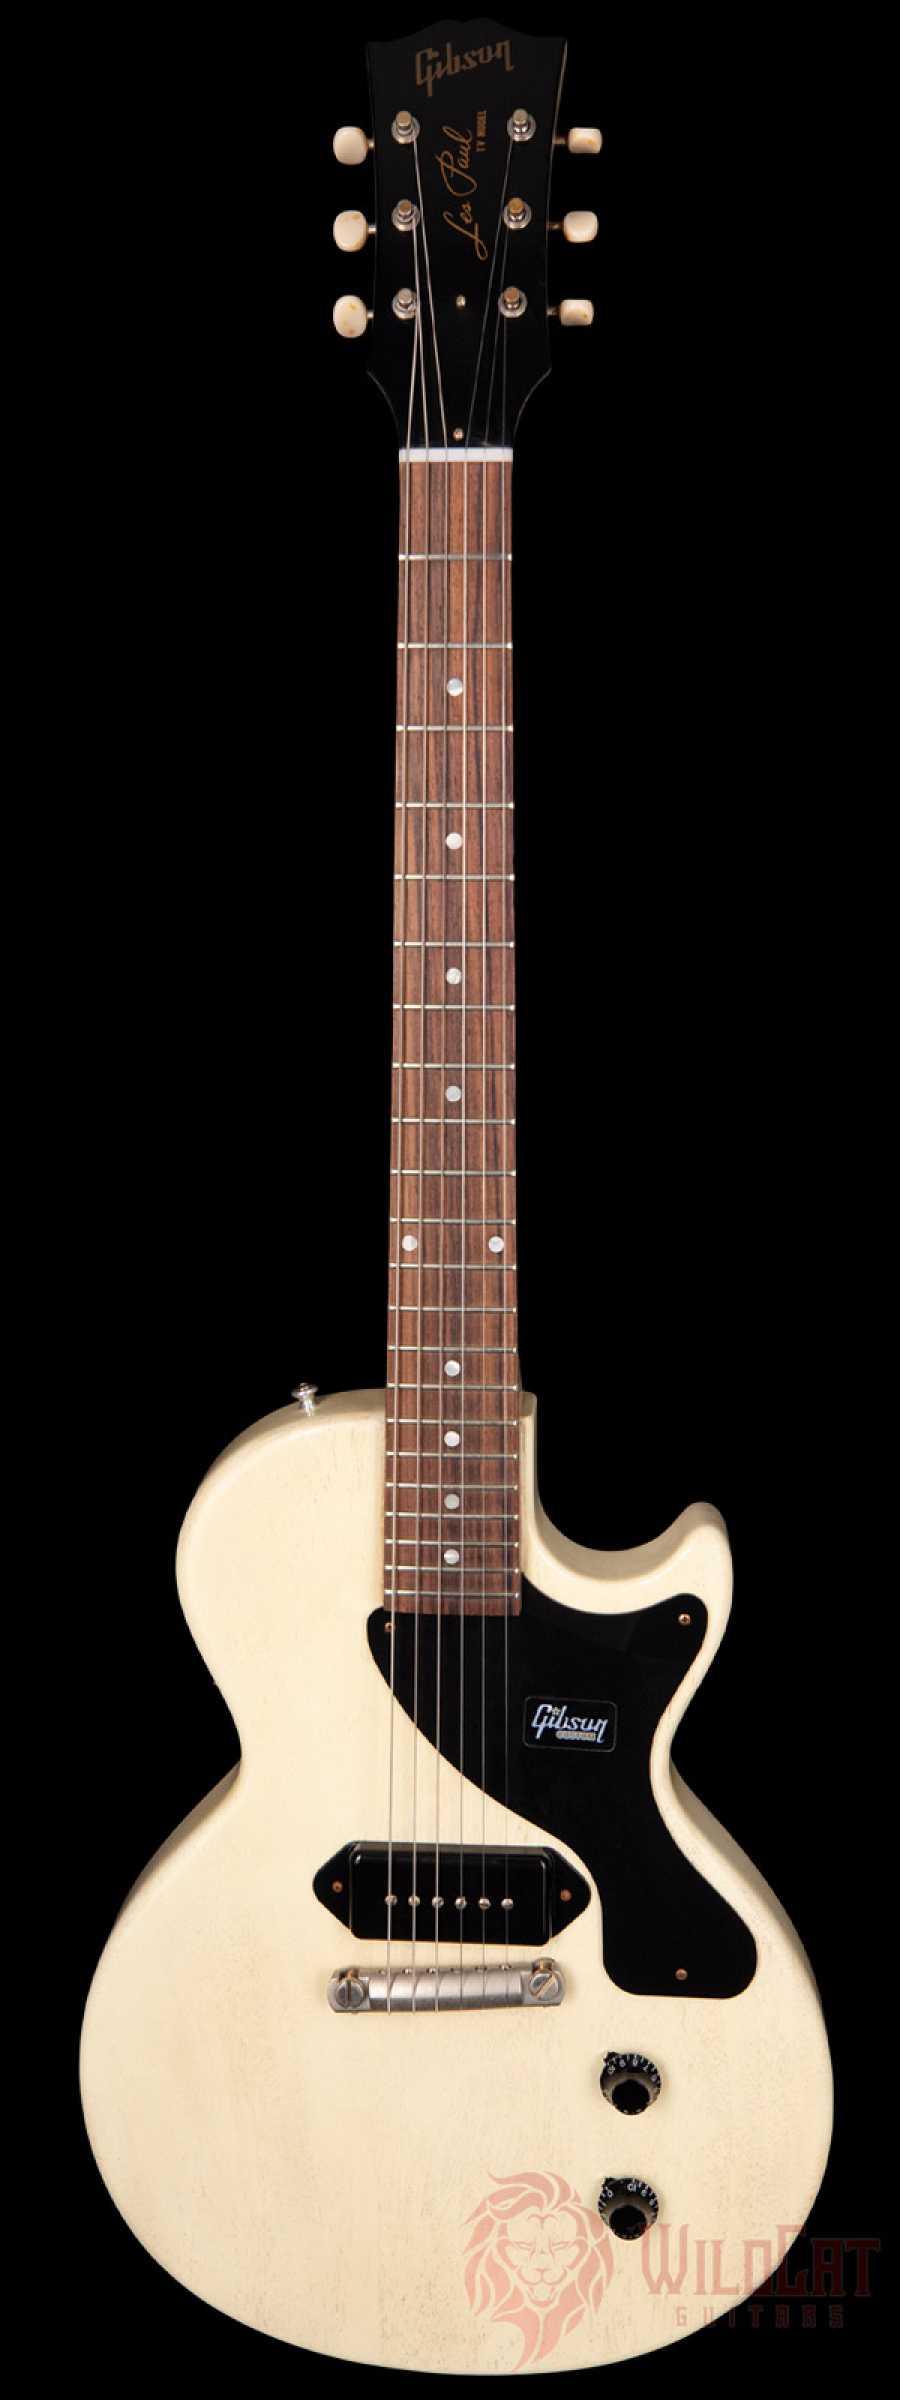 slijtage Verandert in ader Gibson Custom Shop VOS 1957 Les Paul Jr TV White - WildCat Guitars